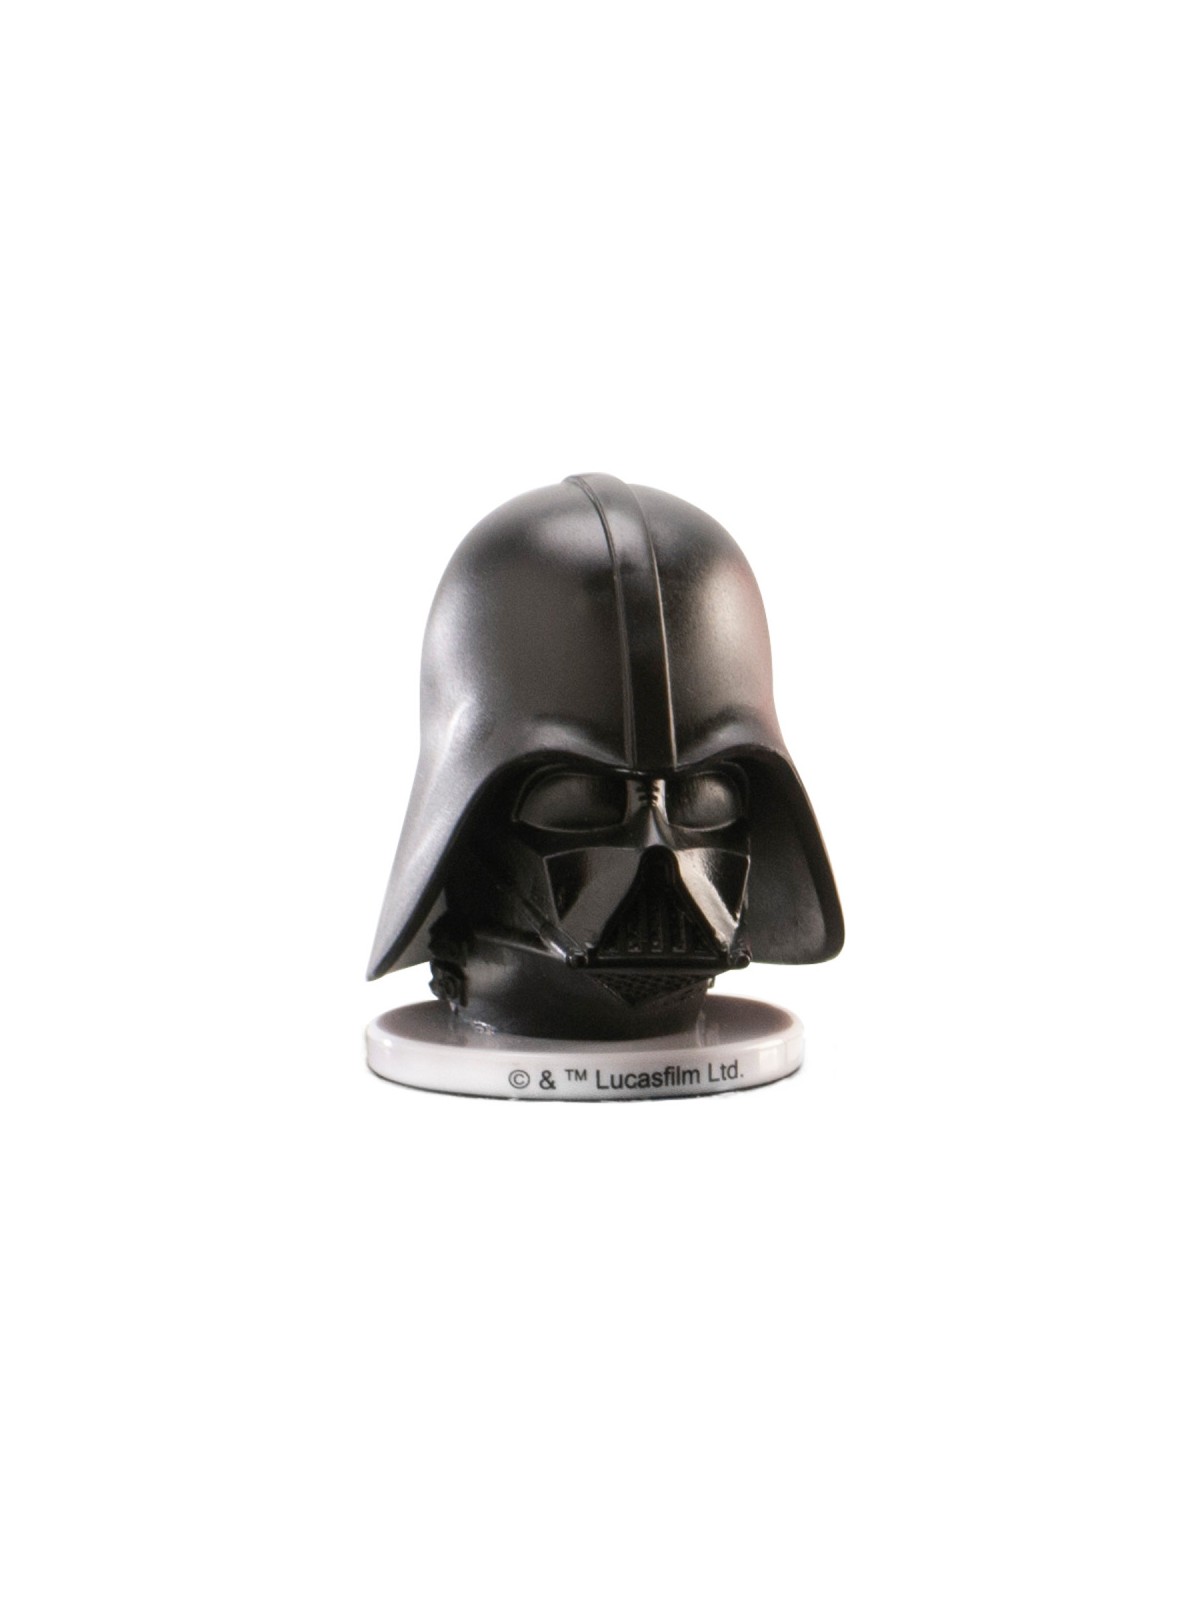 Dekora - Figura dekoracyjna -  Darth Vader - Star wars